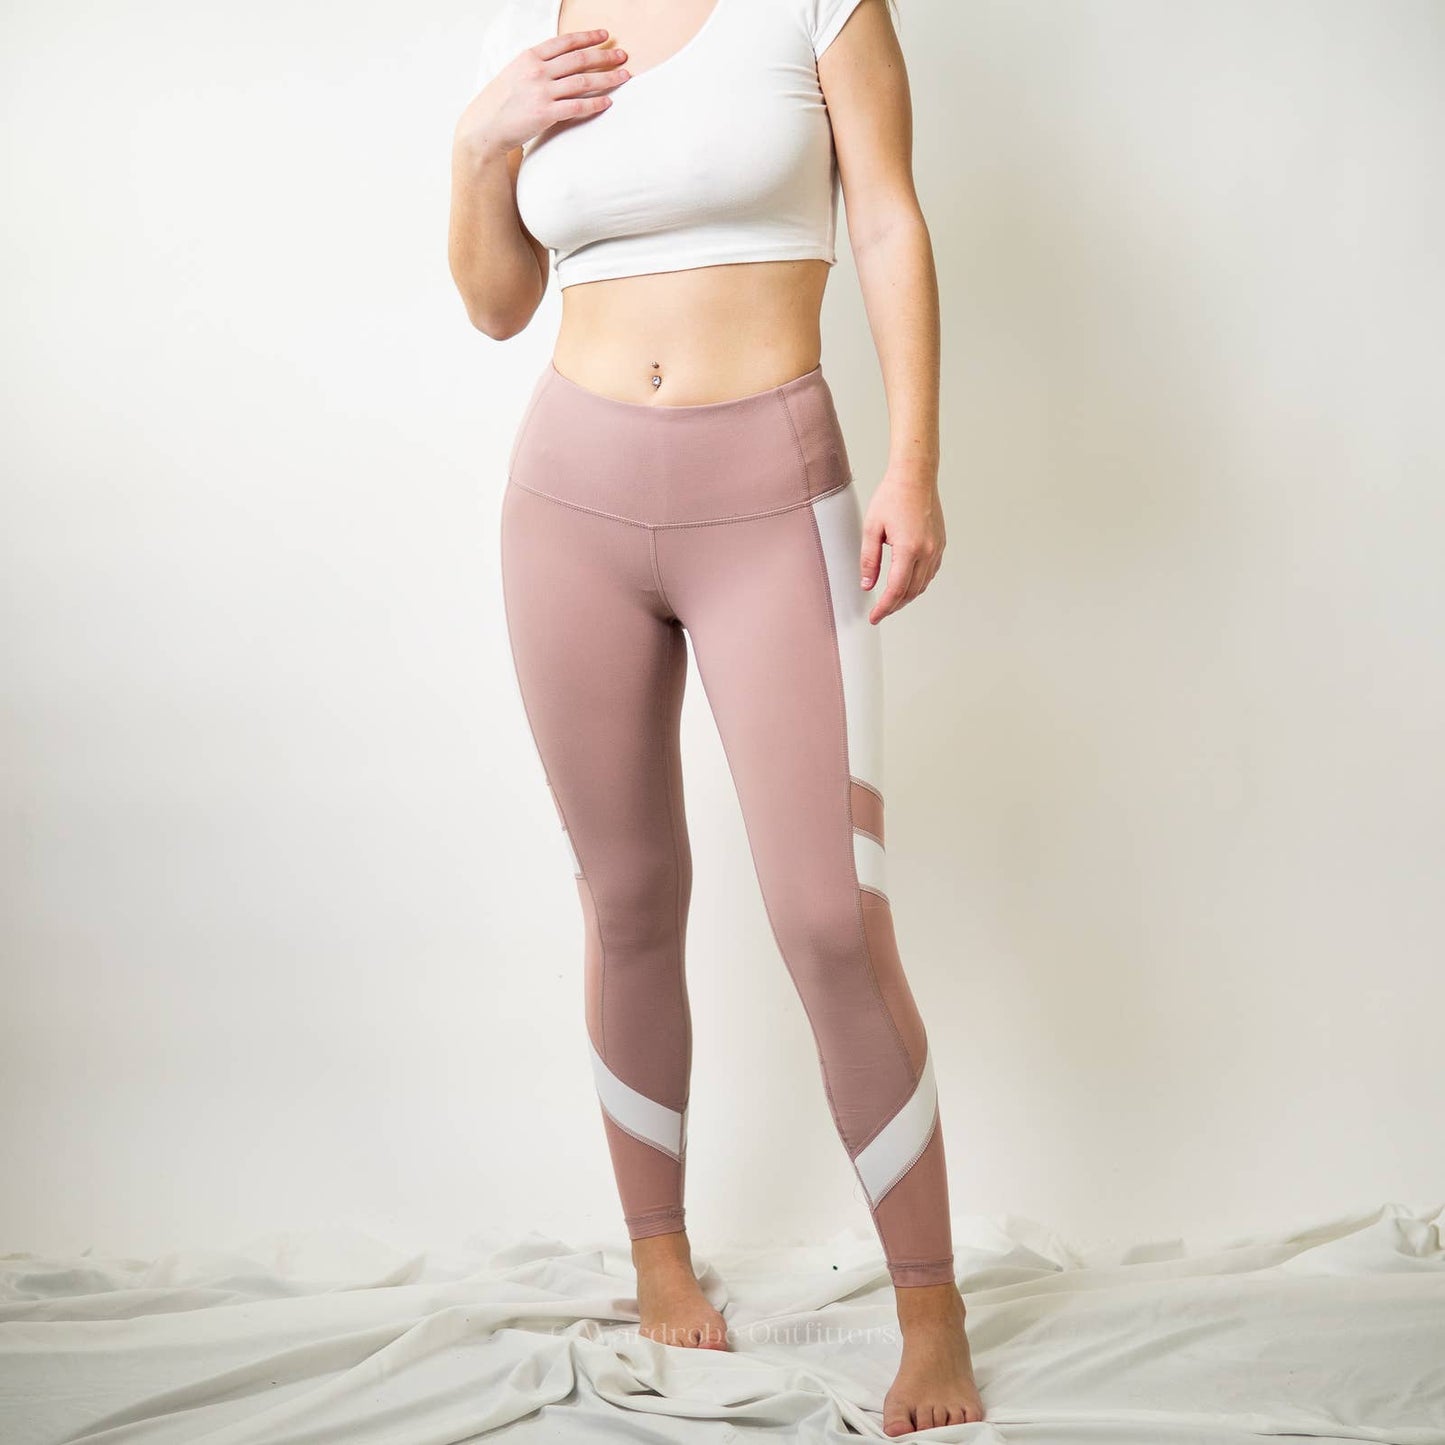 Blush Pink Yoga Leggings by Yogalicious - XS